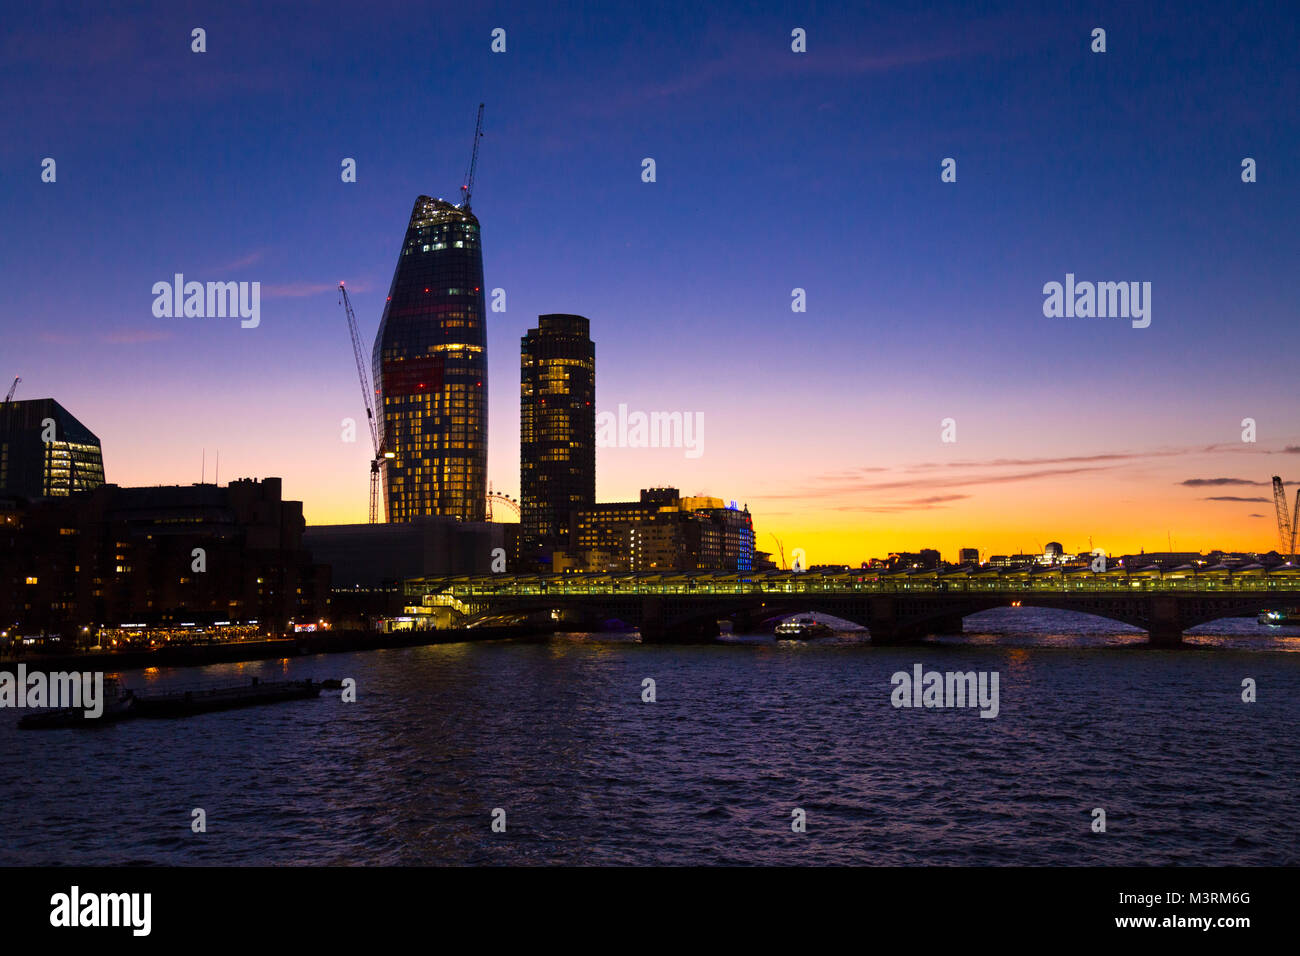 One Blackfriars tower development under construction at sundown, London skyline, London, UK Stock Photo